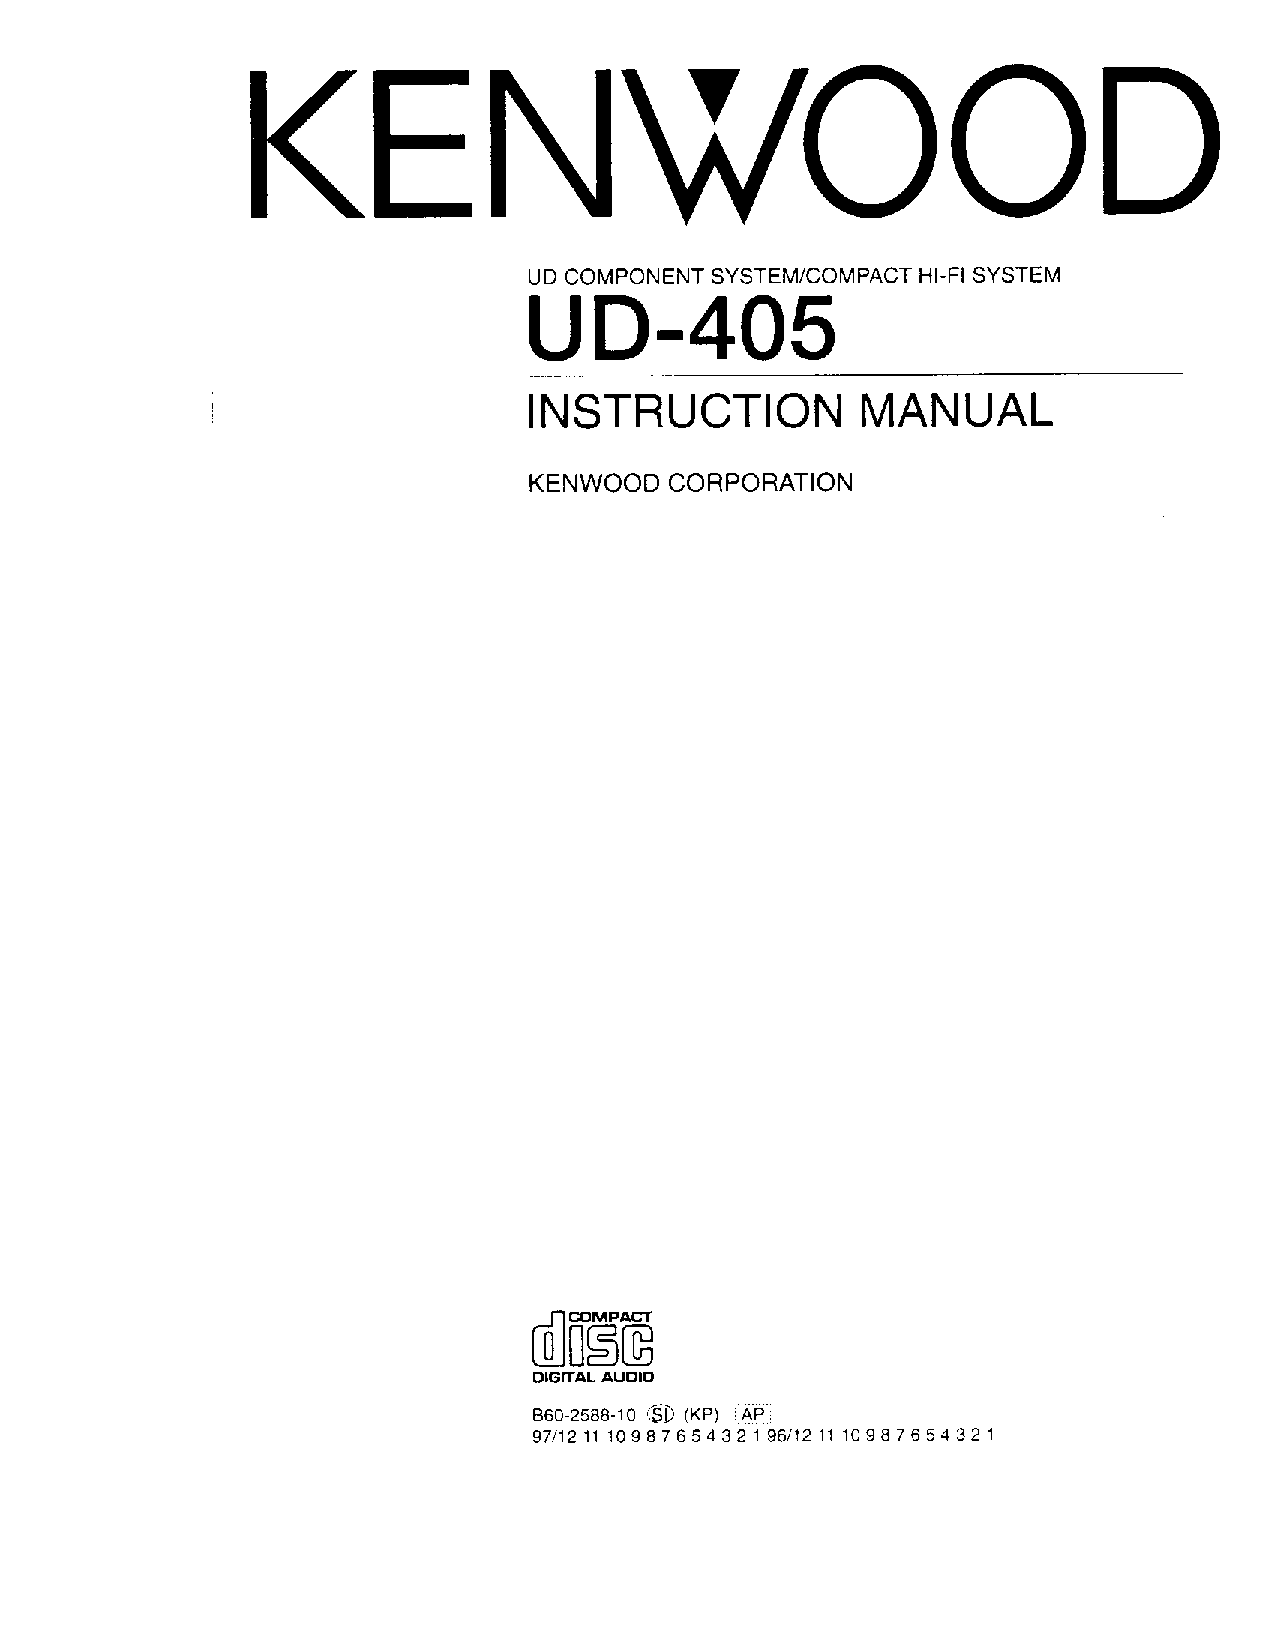 Kenwood UD-405 User Manual